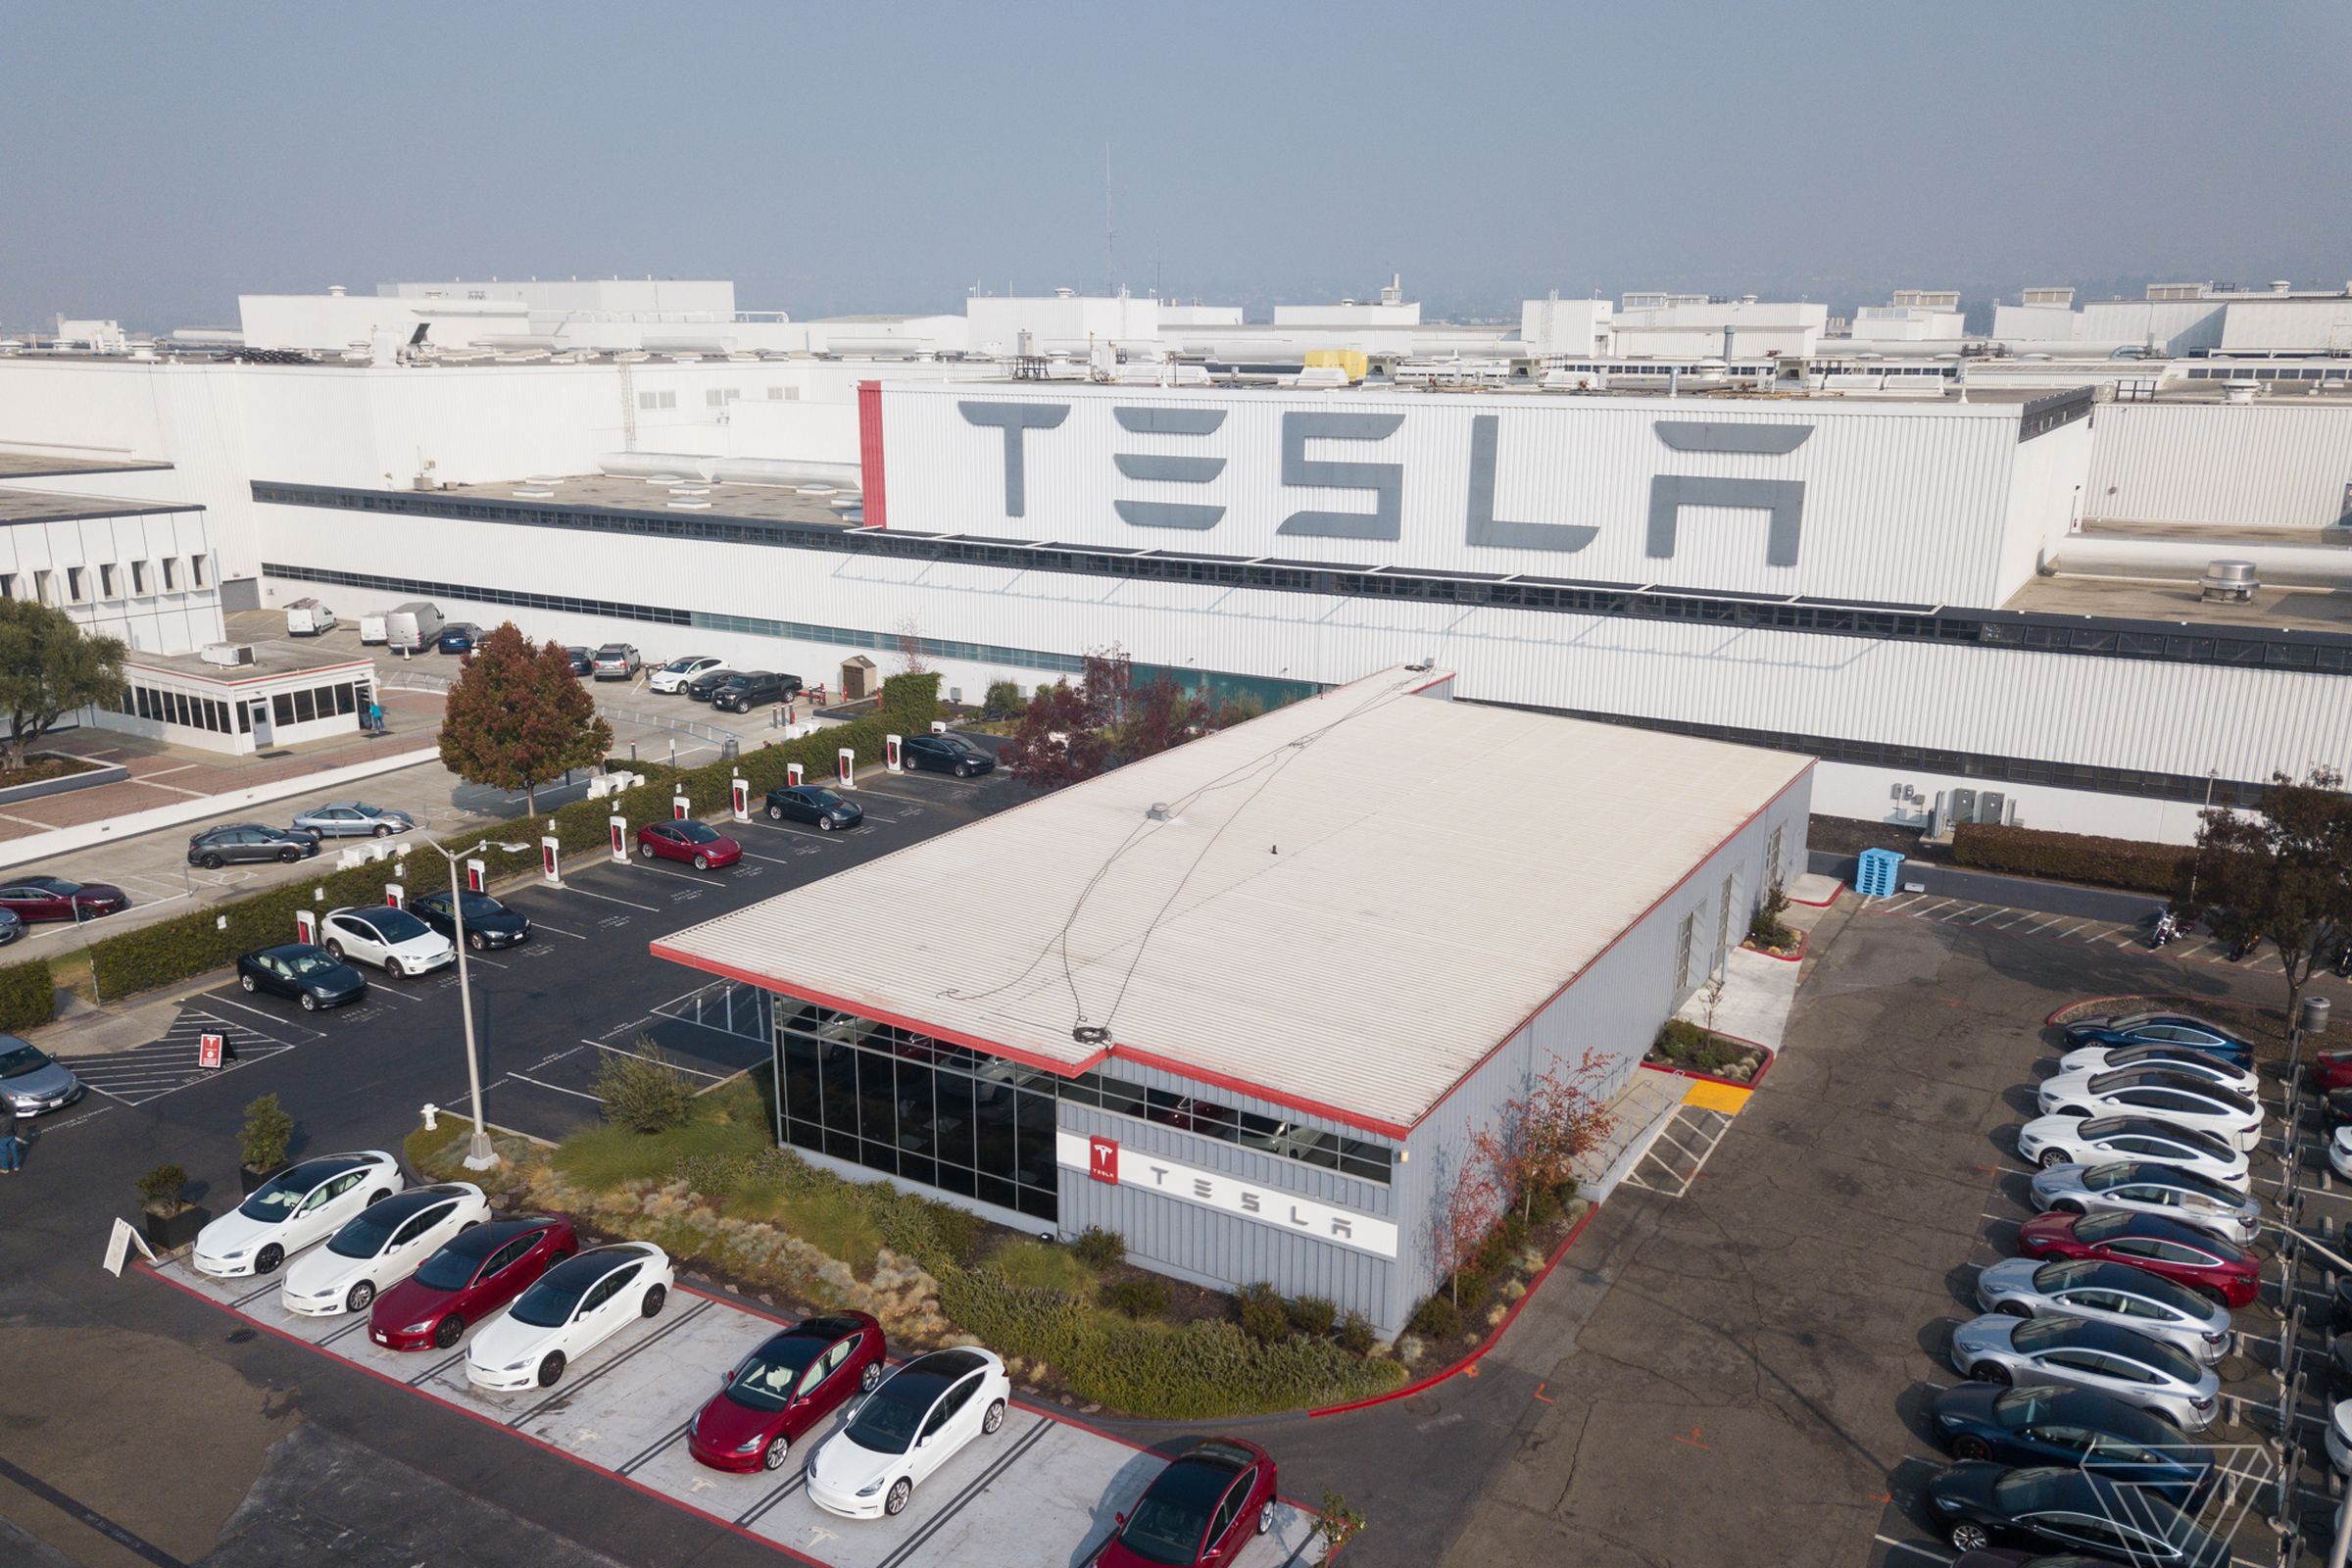 Tesla factory in Fremont, California